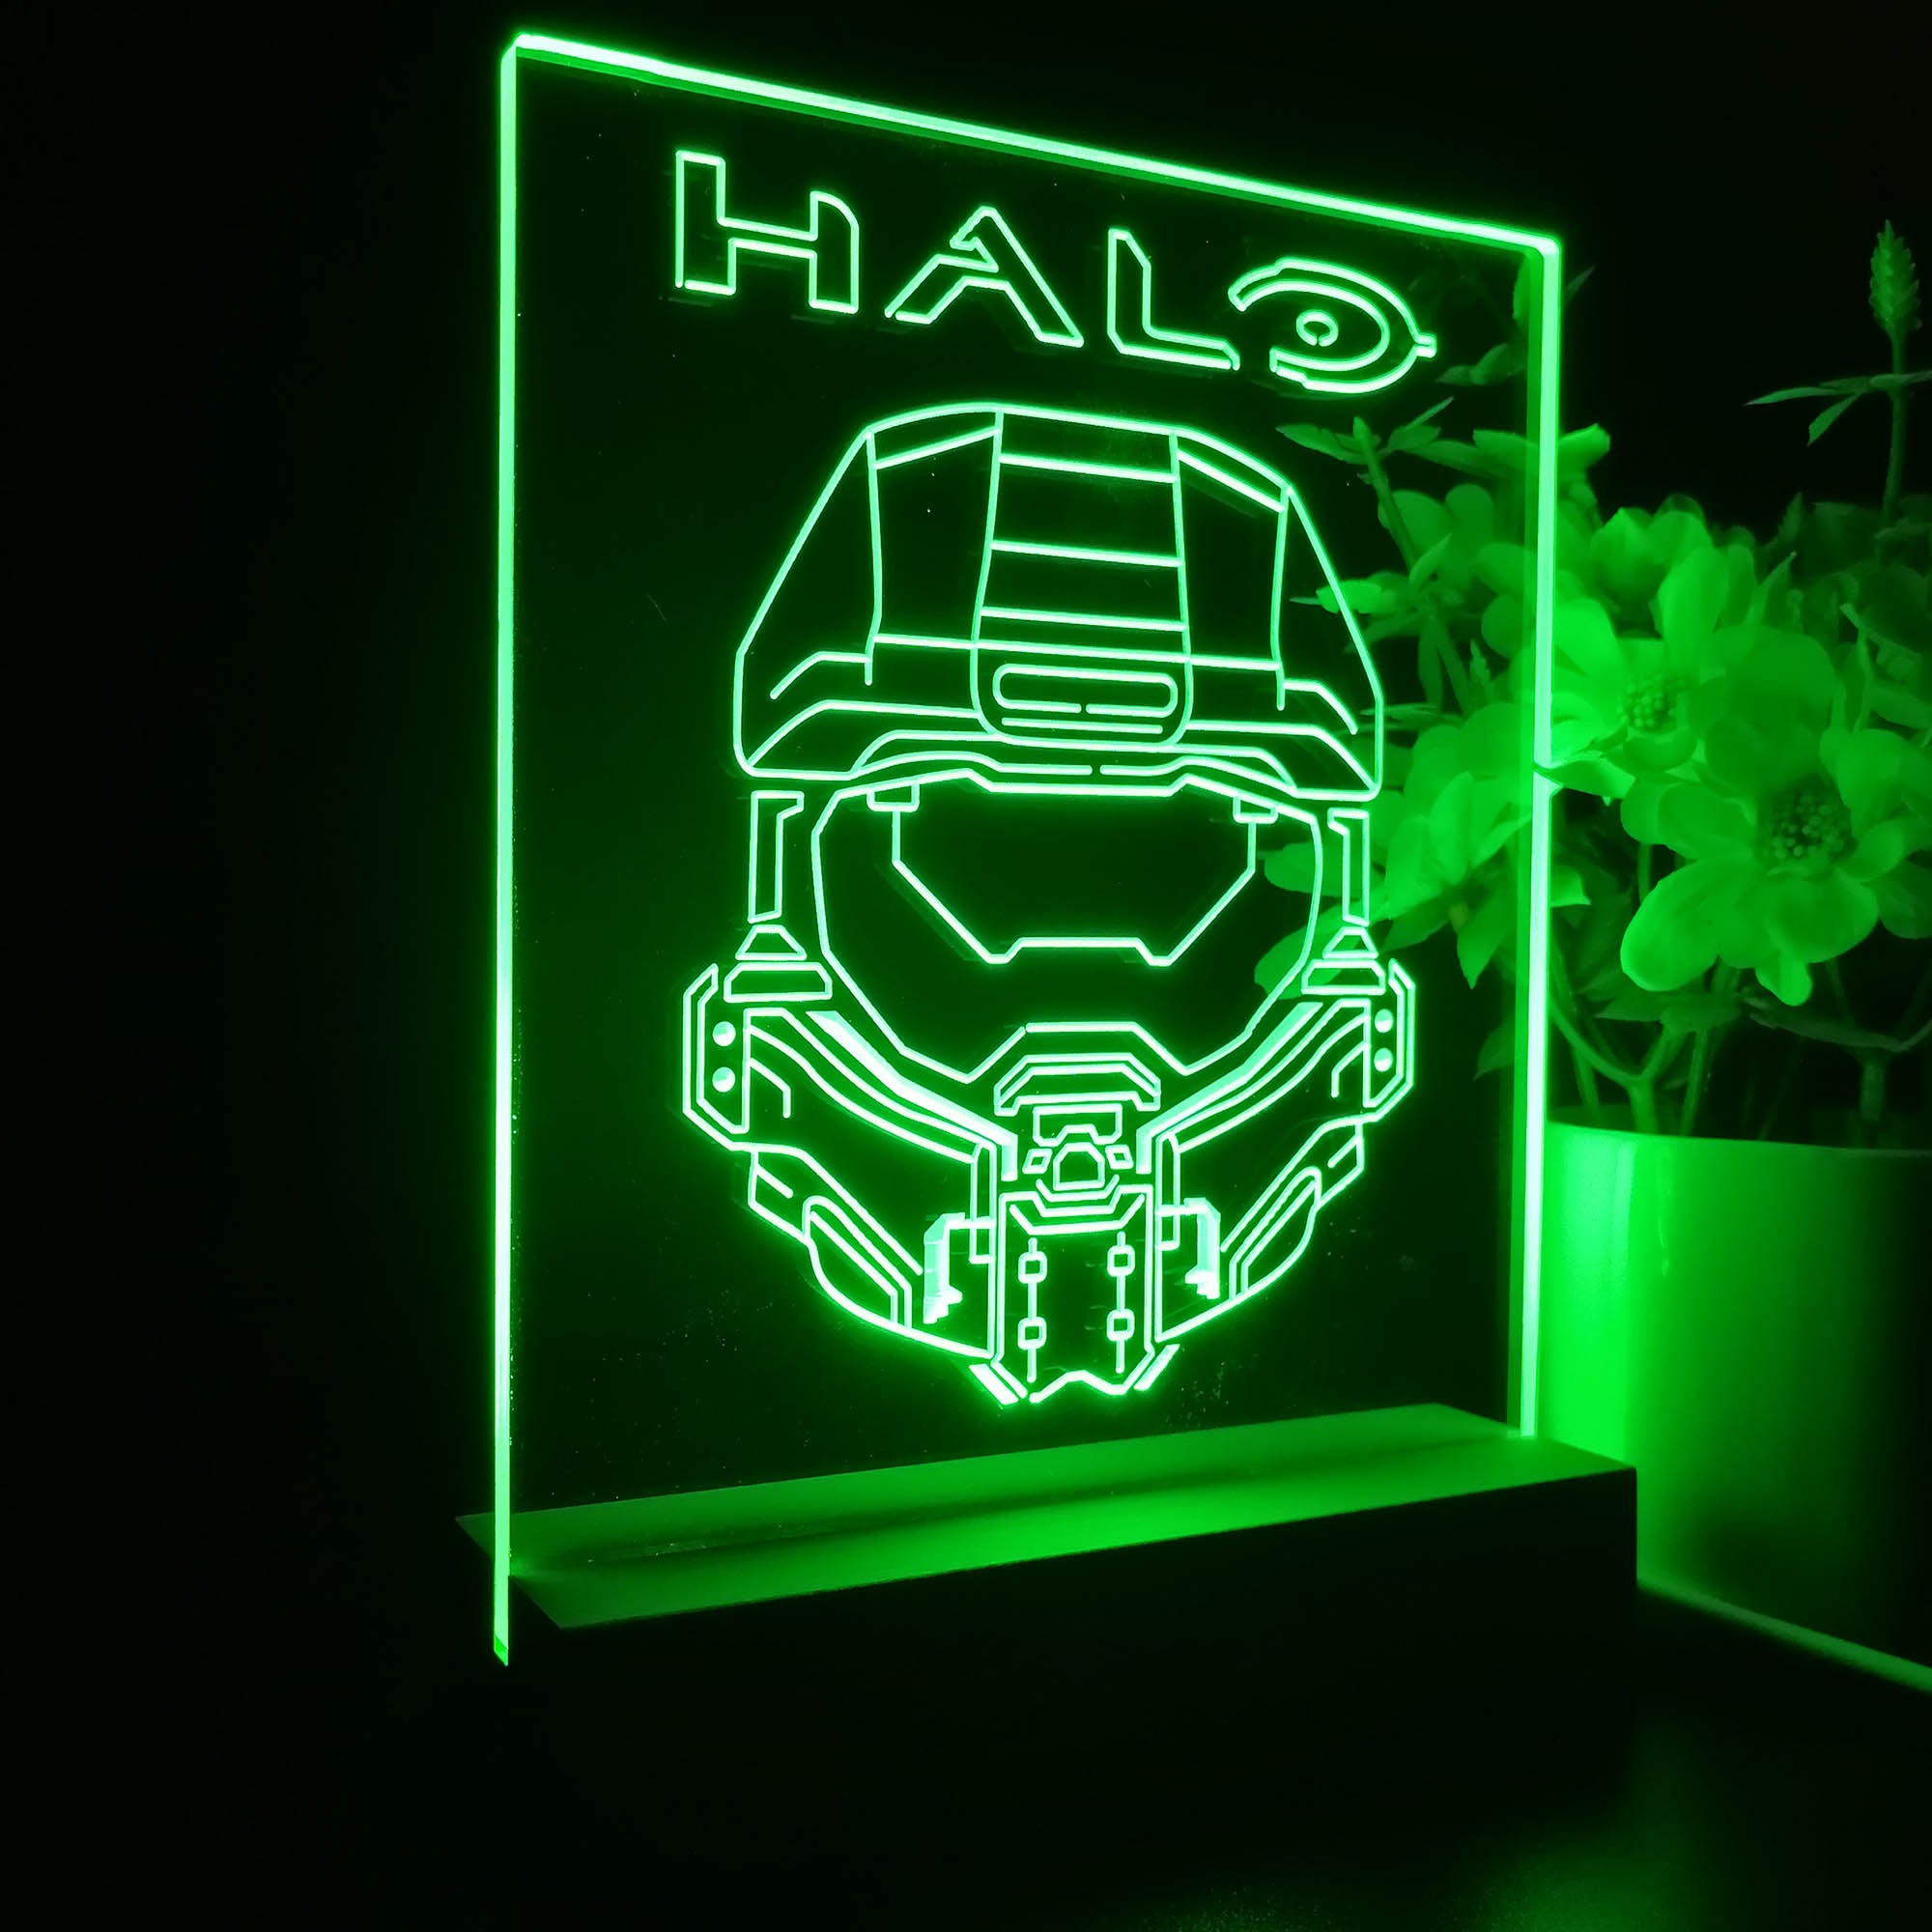 Halo Master Chief 3D LED Optical Illusion Sleep Night Light Table Lamp